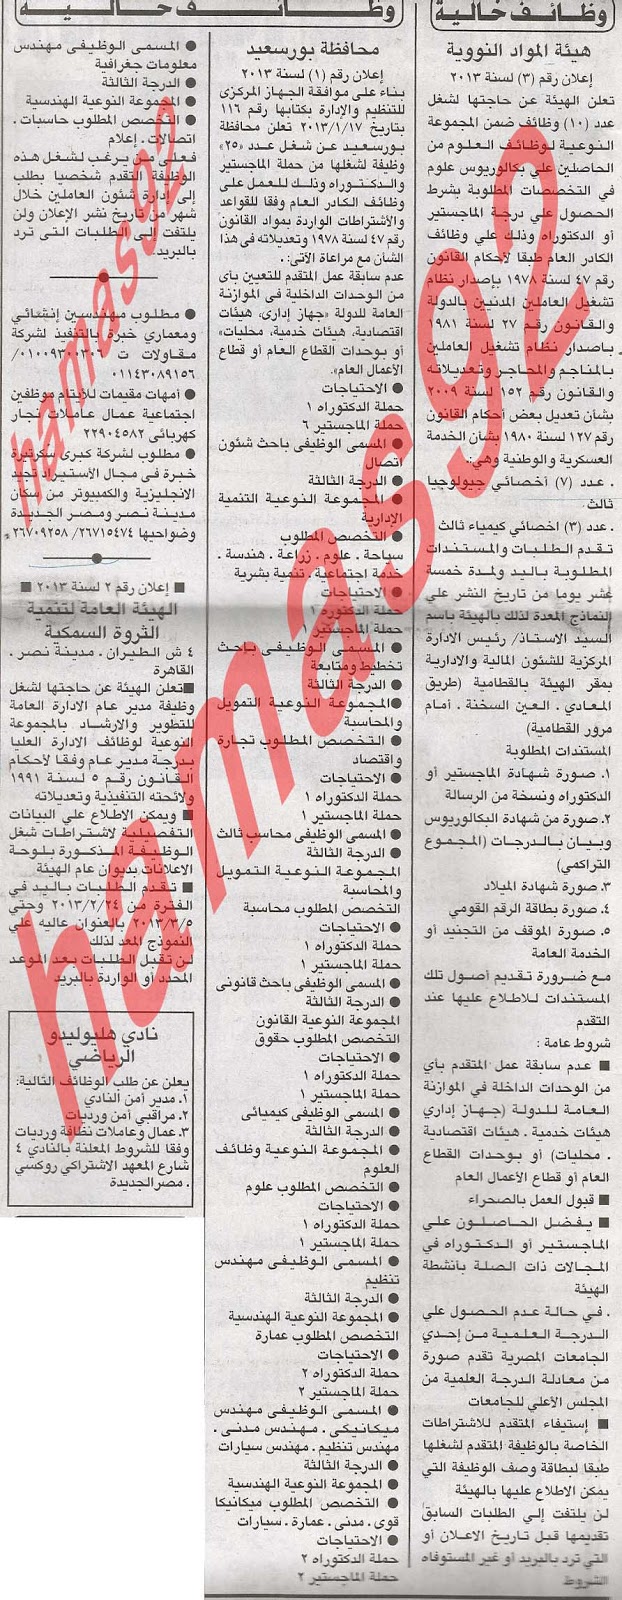 وظائف خالية فى محافظة بورسعيد لحملة الماجستير والدكتوراة %D8%A7%D9%84%D8%A7%D9%87%D8%B1%D8%A7%D9%85+1